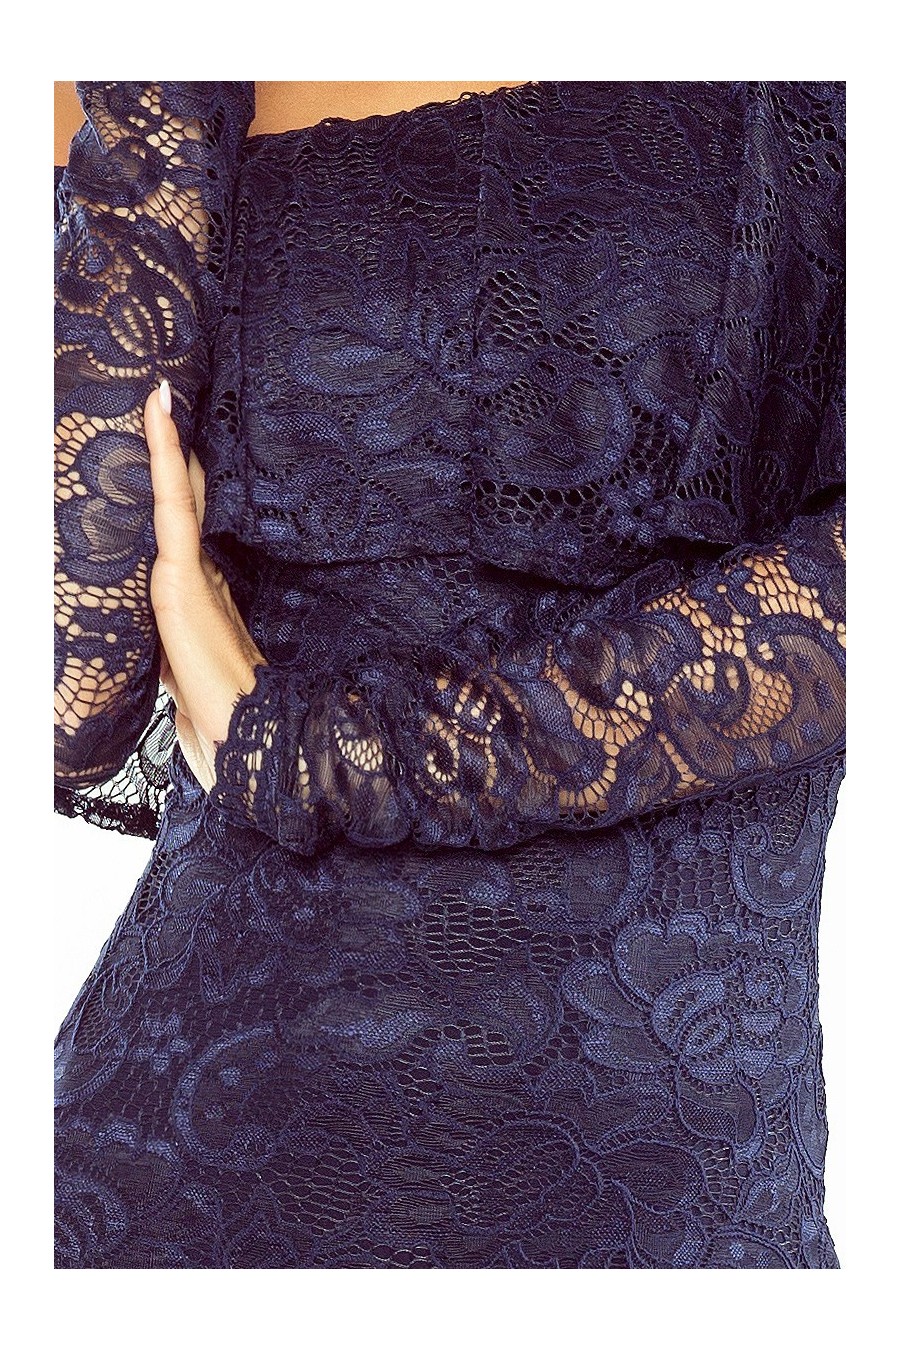 MM 021-2 Šaty s límcem - krajka - tmavě modrá